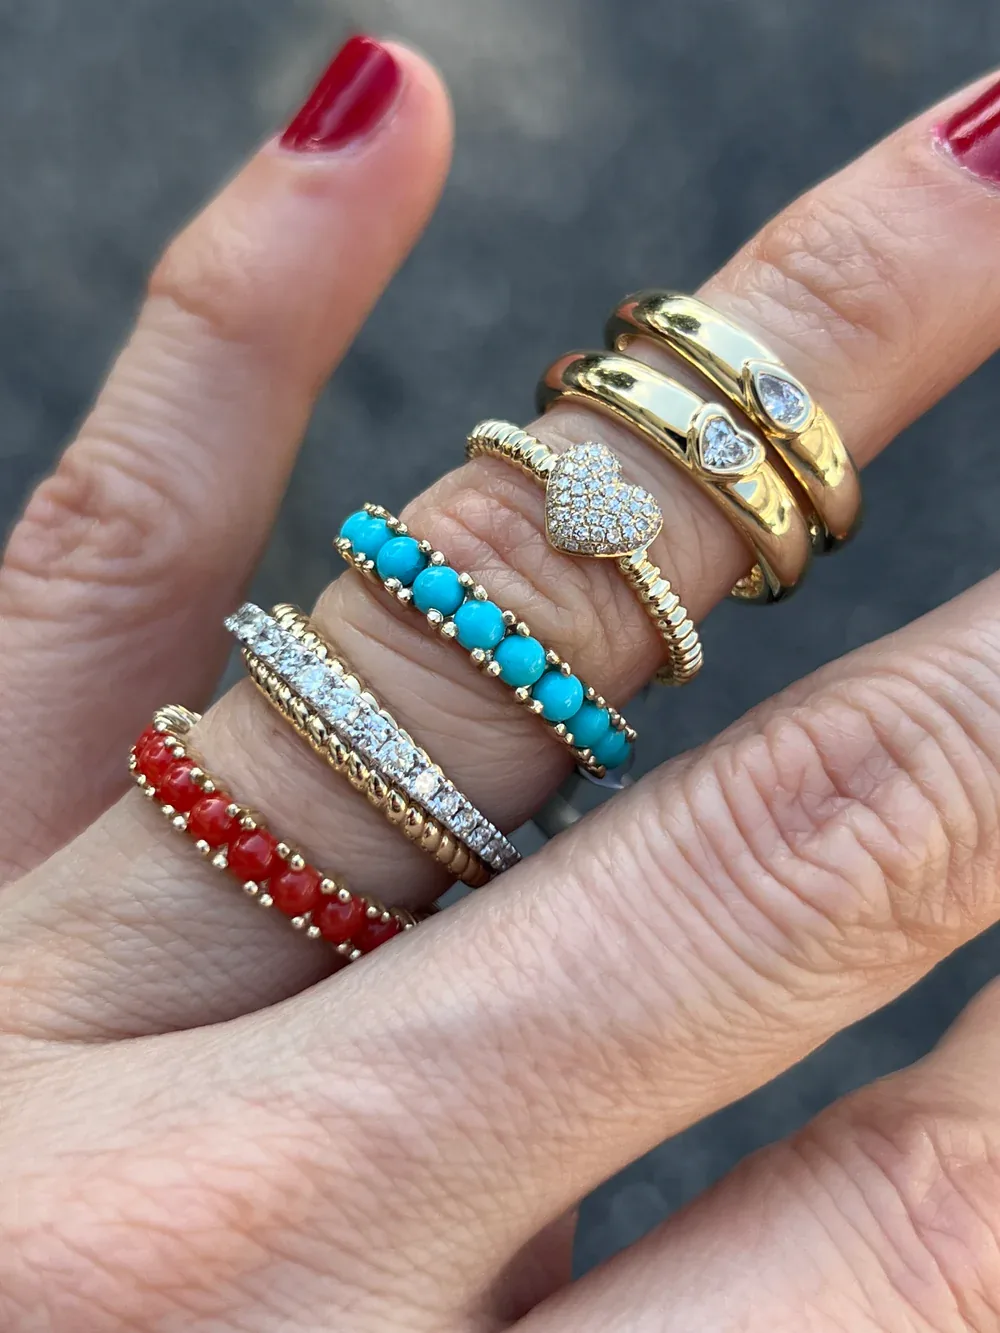 Santayana Jewelry Rings